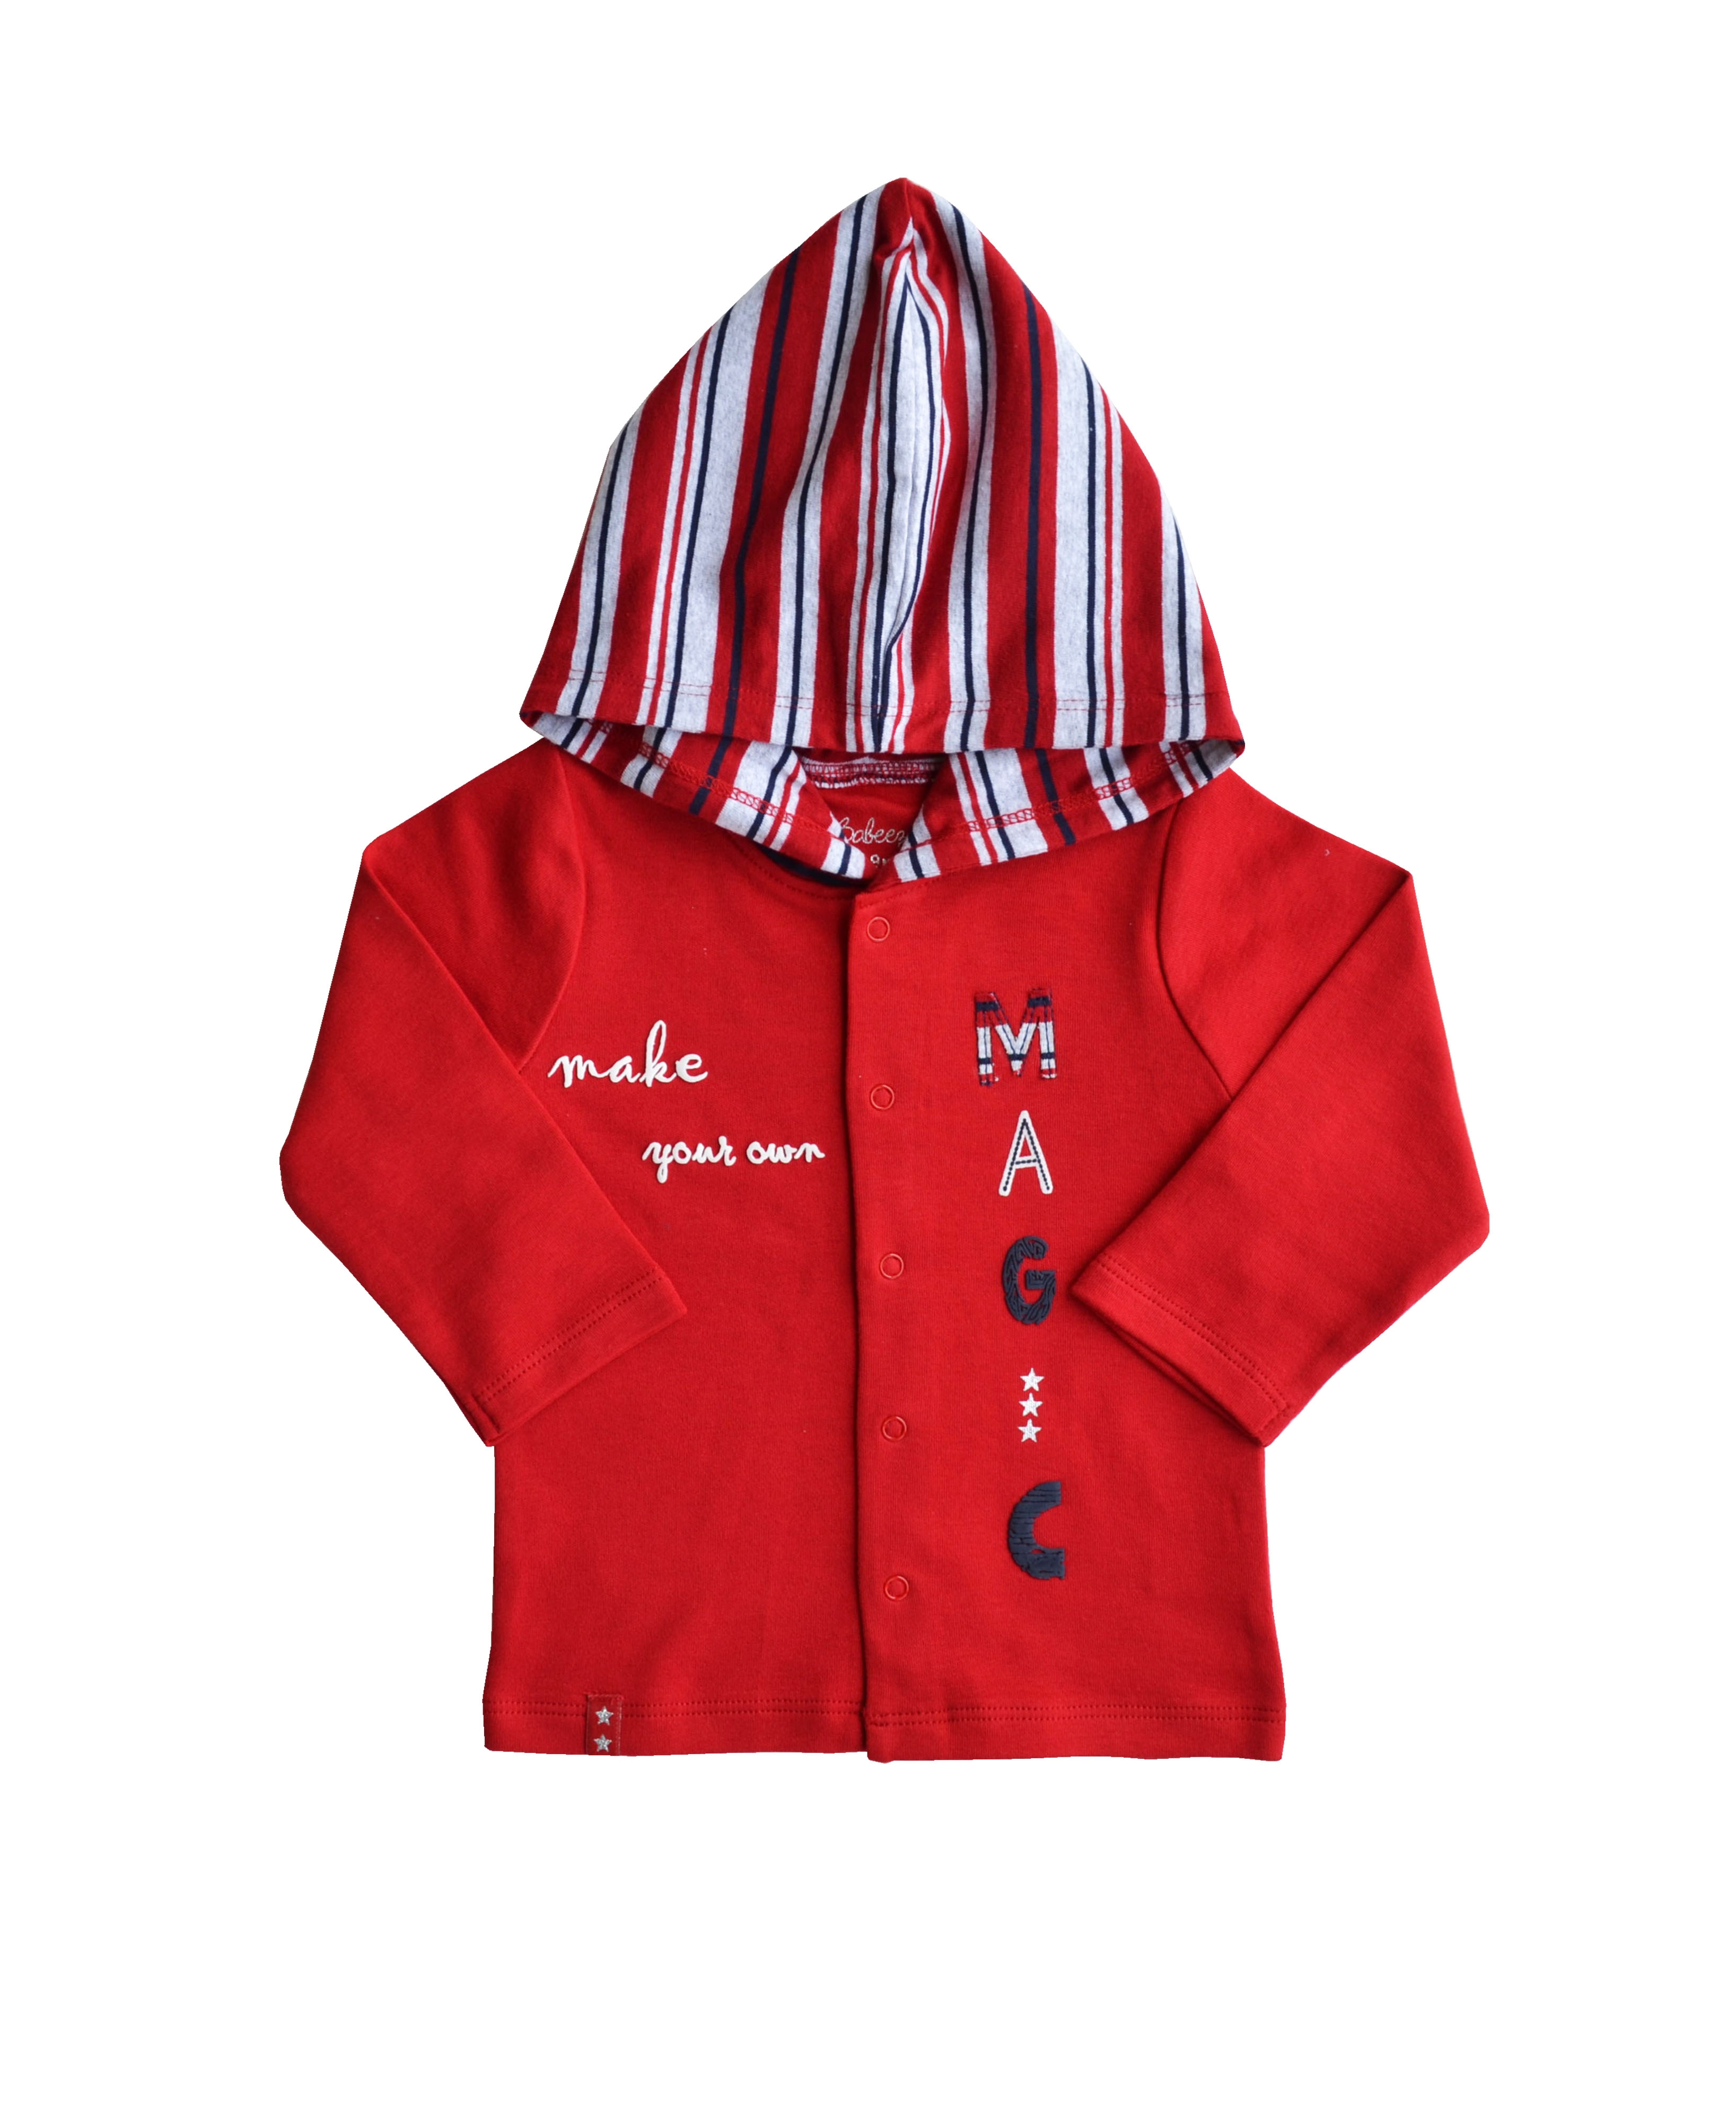 MAGIC applique on Red Long Sleeves Hoody Jacket(100% Cotton Interlock Biowash)